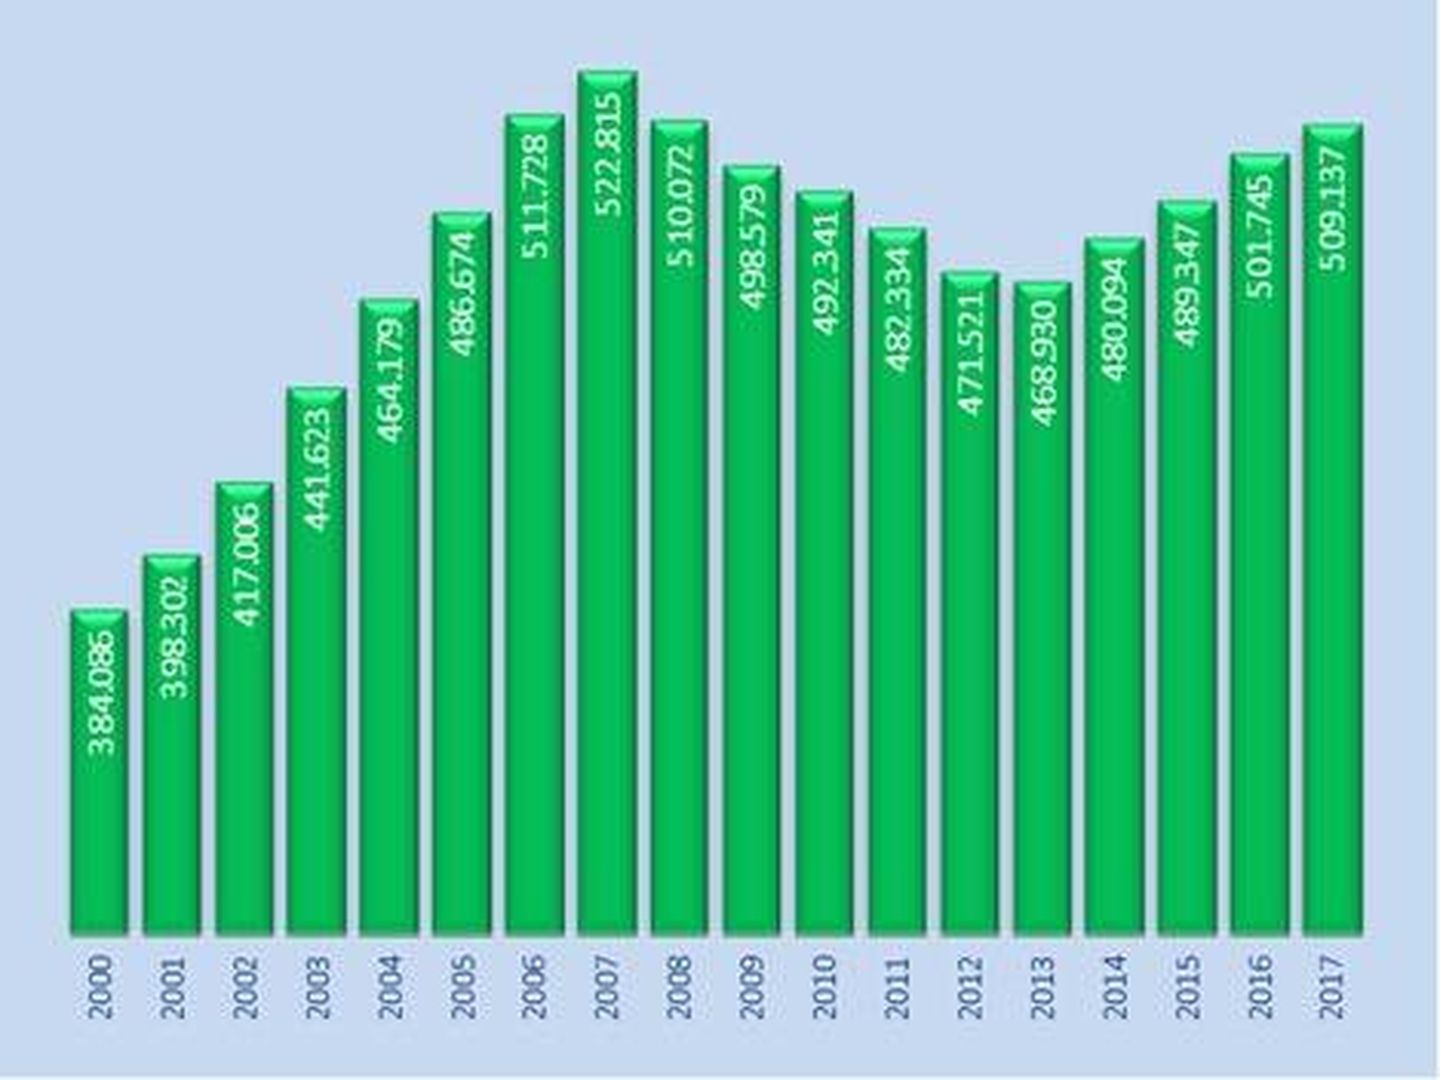 Evolución 2000-2017 del número de empresas en Andalucía. (CEA)